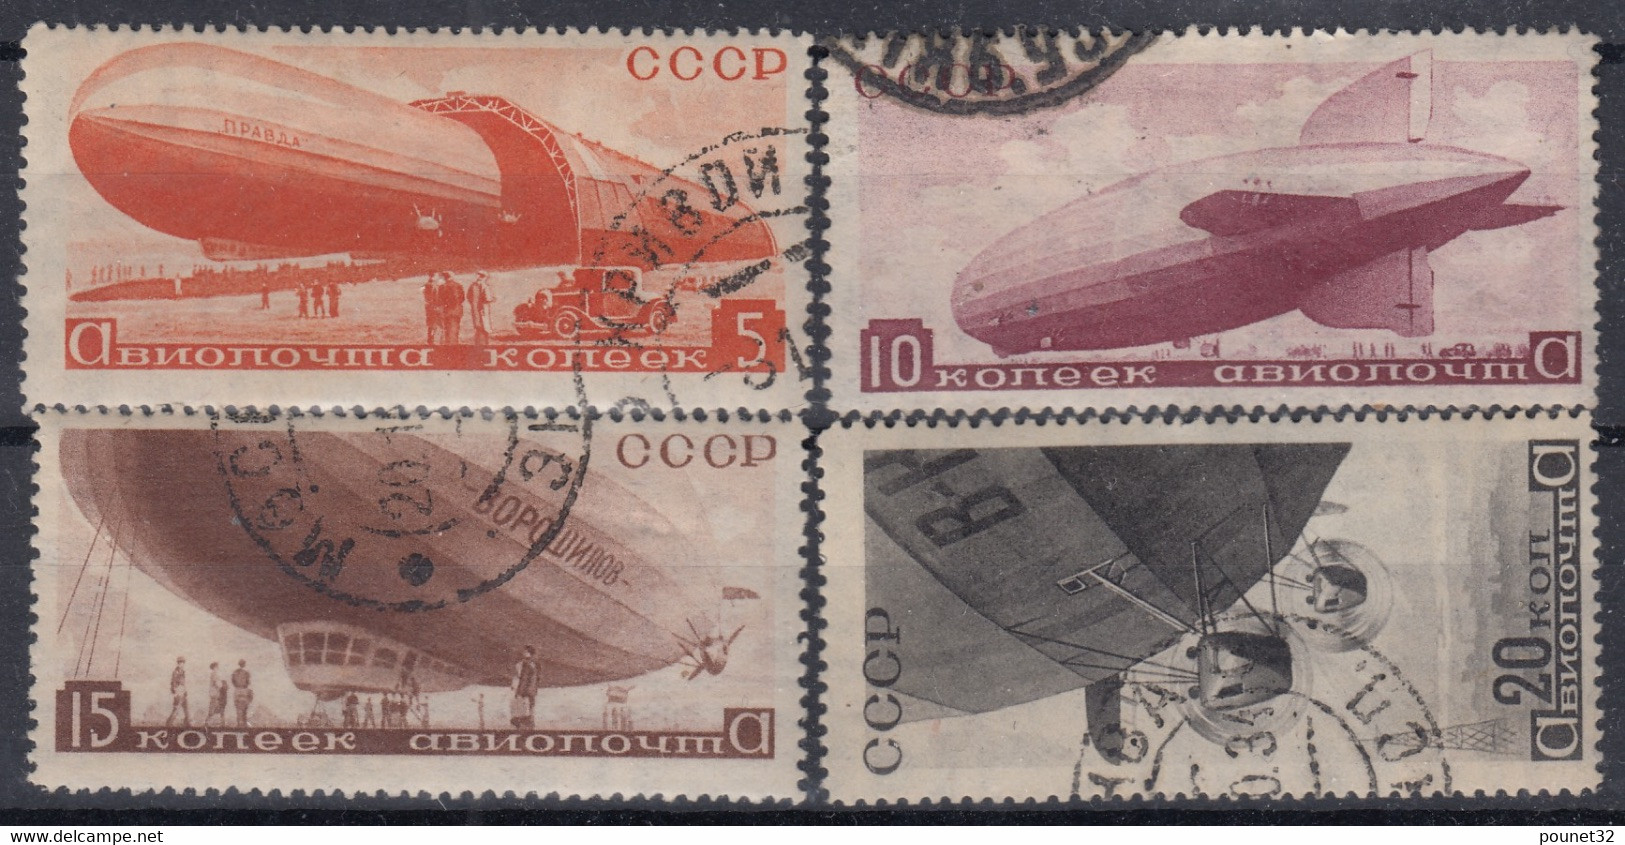 RUSSIE : POSTE AERIENNE 1934 DIRIGEABLES N° 33/36 OBLITERATIONS CHOISIES - Used Stamps